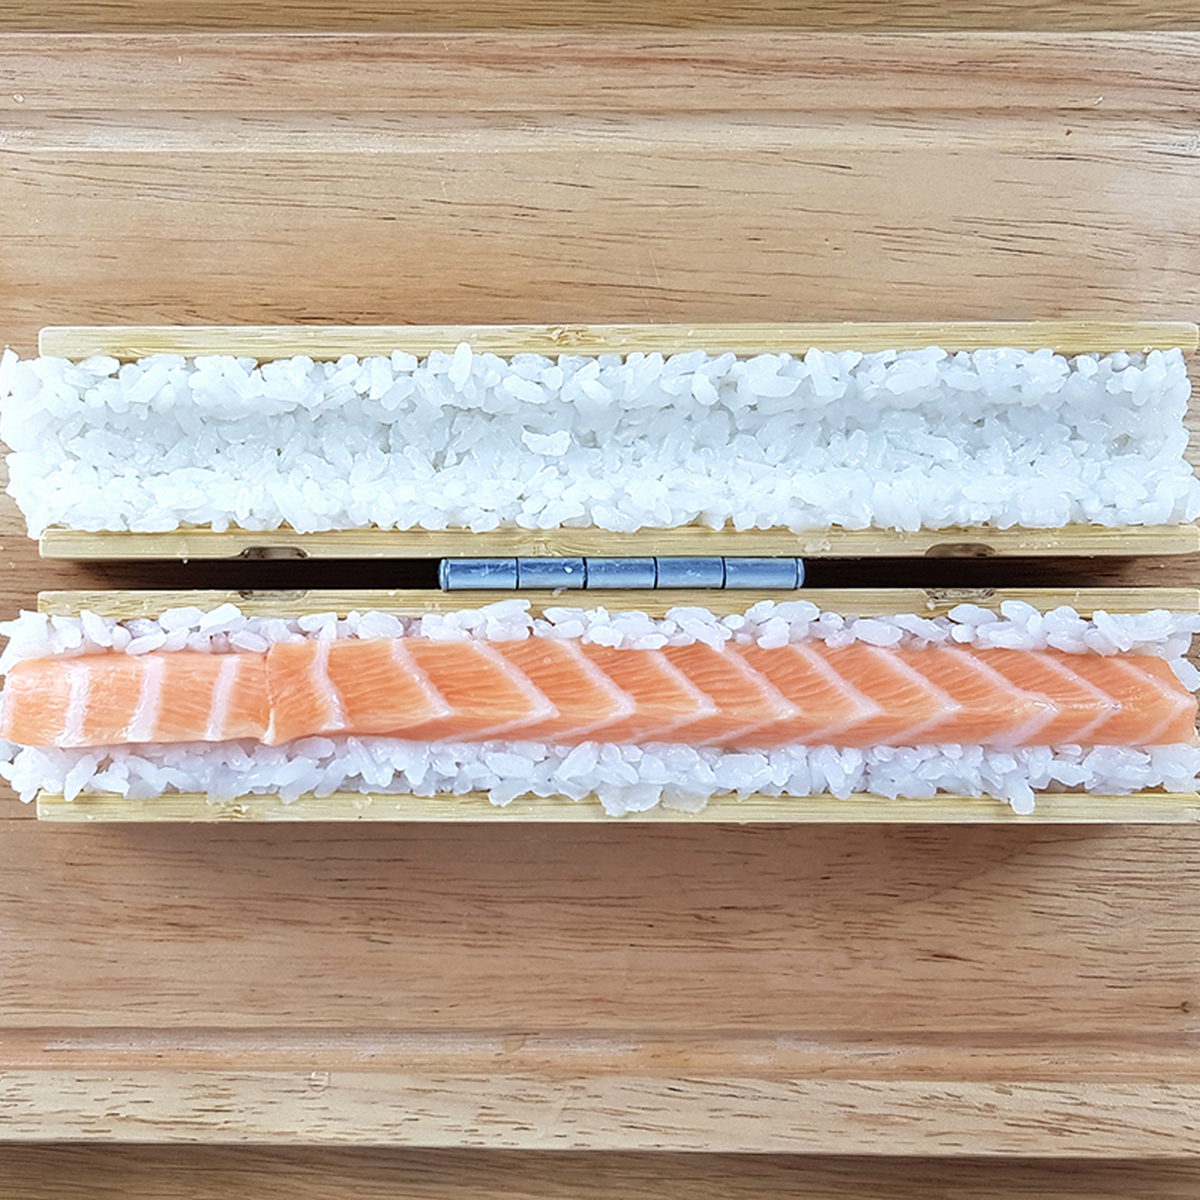 cookut coffret-sushi-maki-faciles ustensile de cuisine une idee cadeau chez ugo et lea (3)